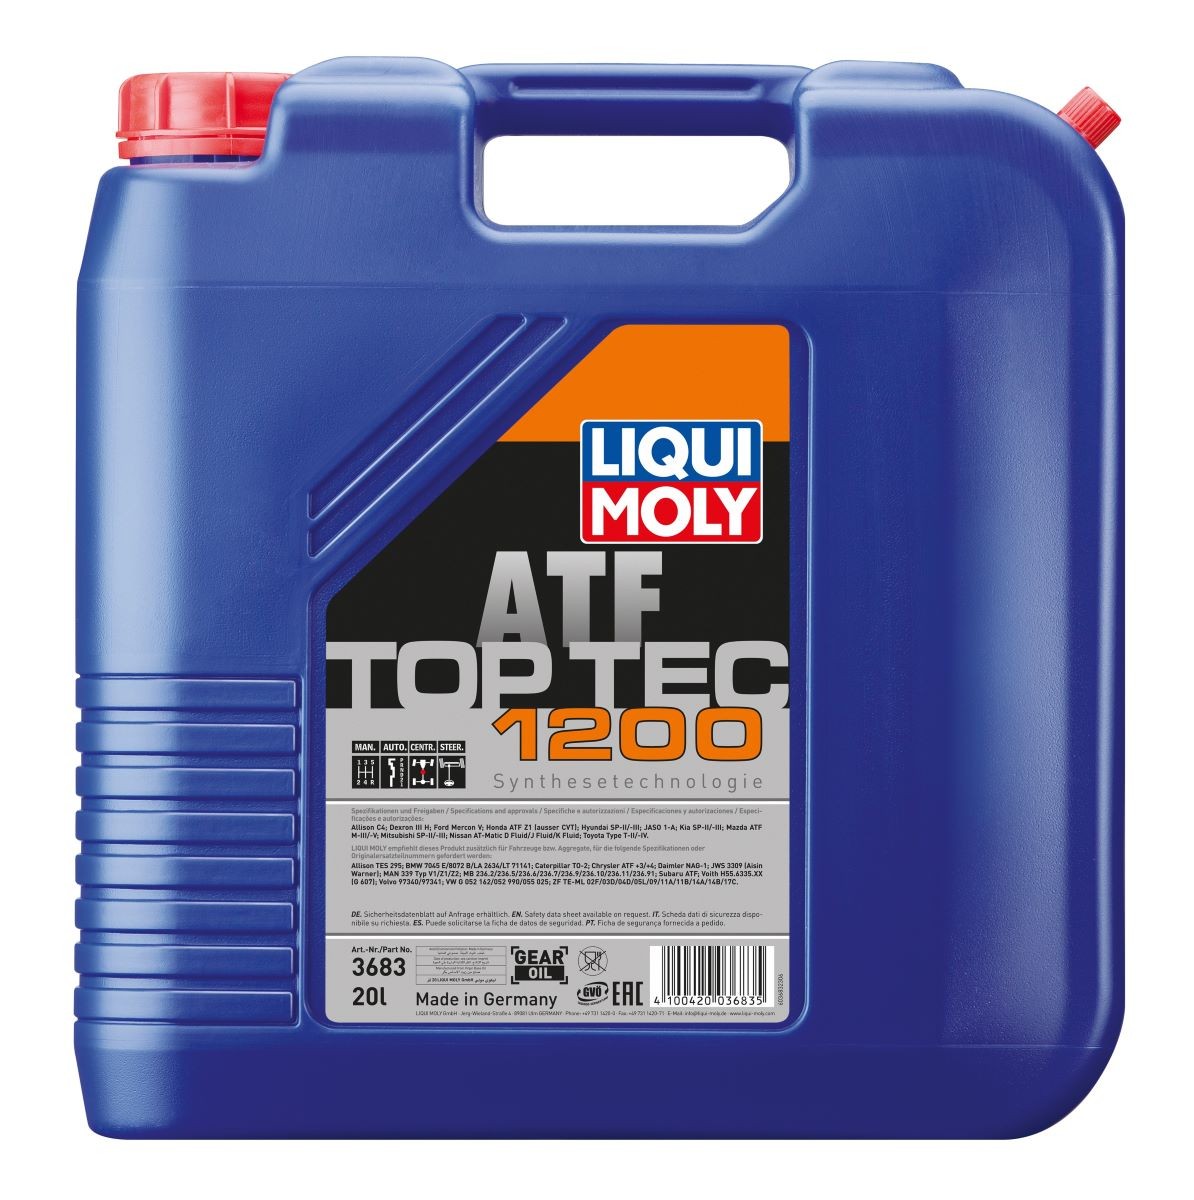 LIQUI MOLY Top Tec ATF 1200 3683 Hydraulic oil W210 E 320 3.2 4-matic 224 hp Petrol 2002 price